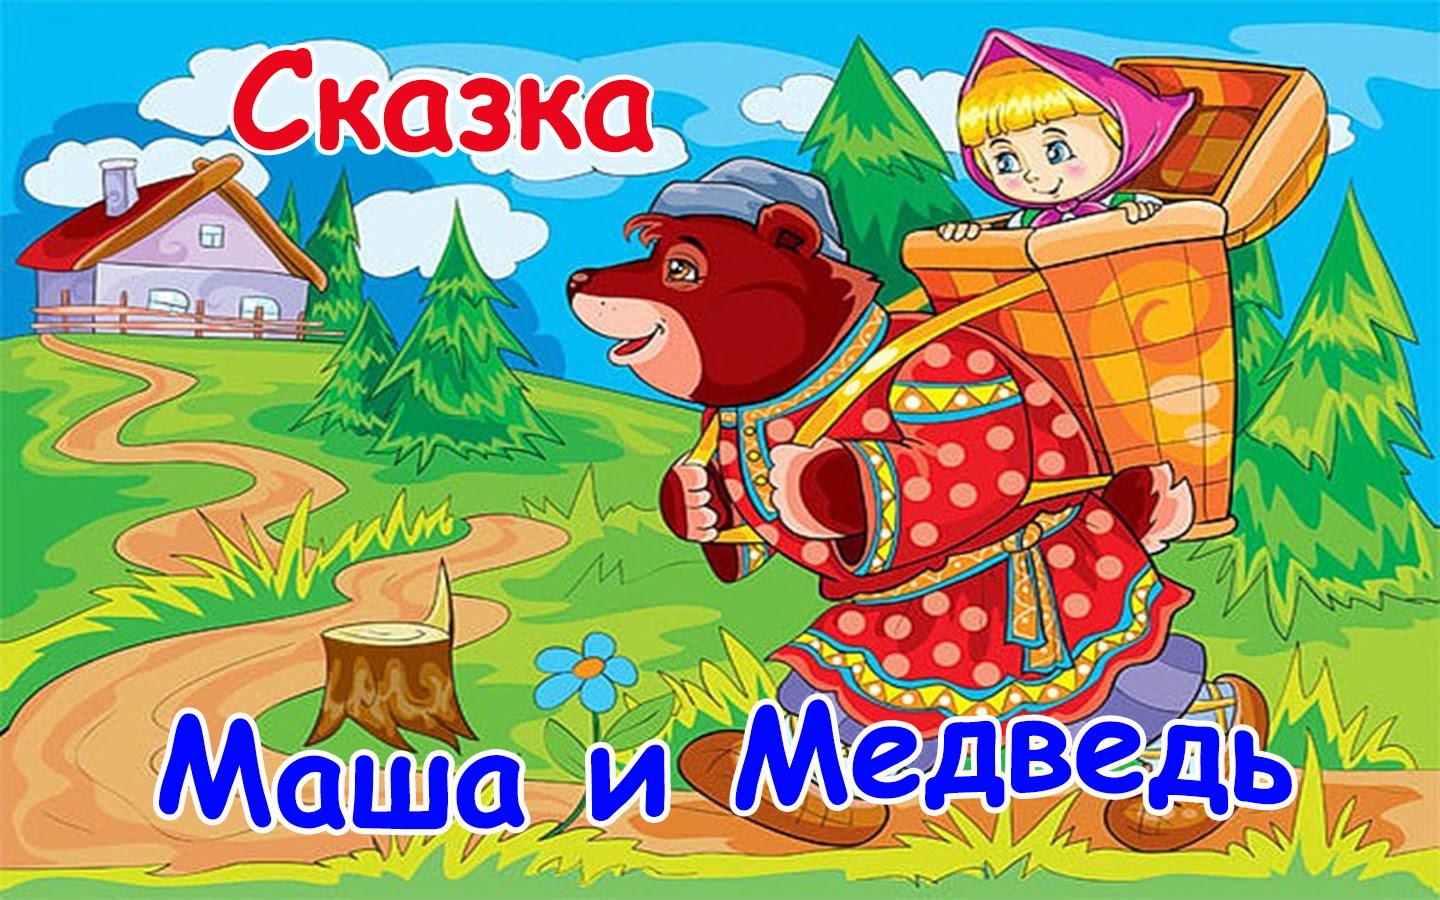 Маша и медведь сказки русские народные сказки: Маша и медведь, читать сказку с картинками